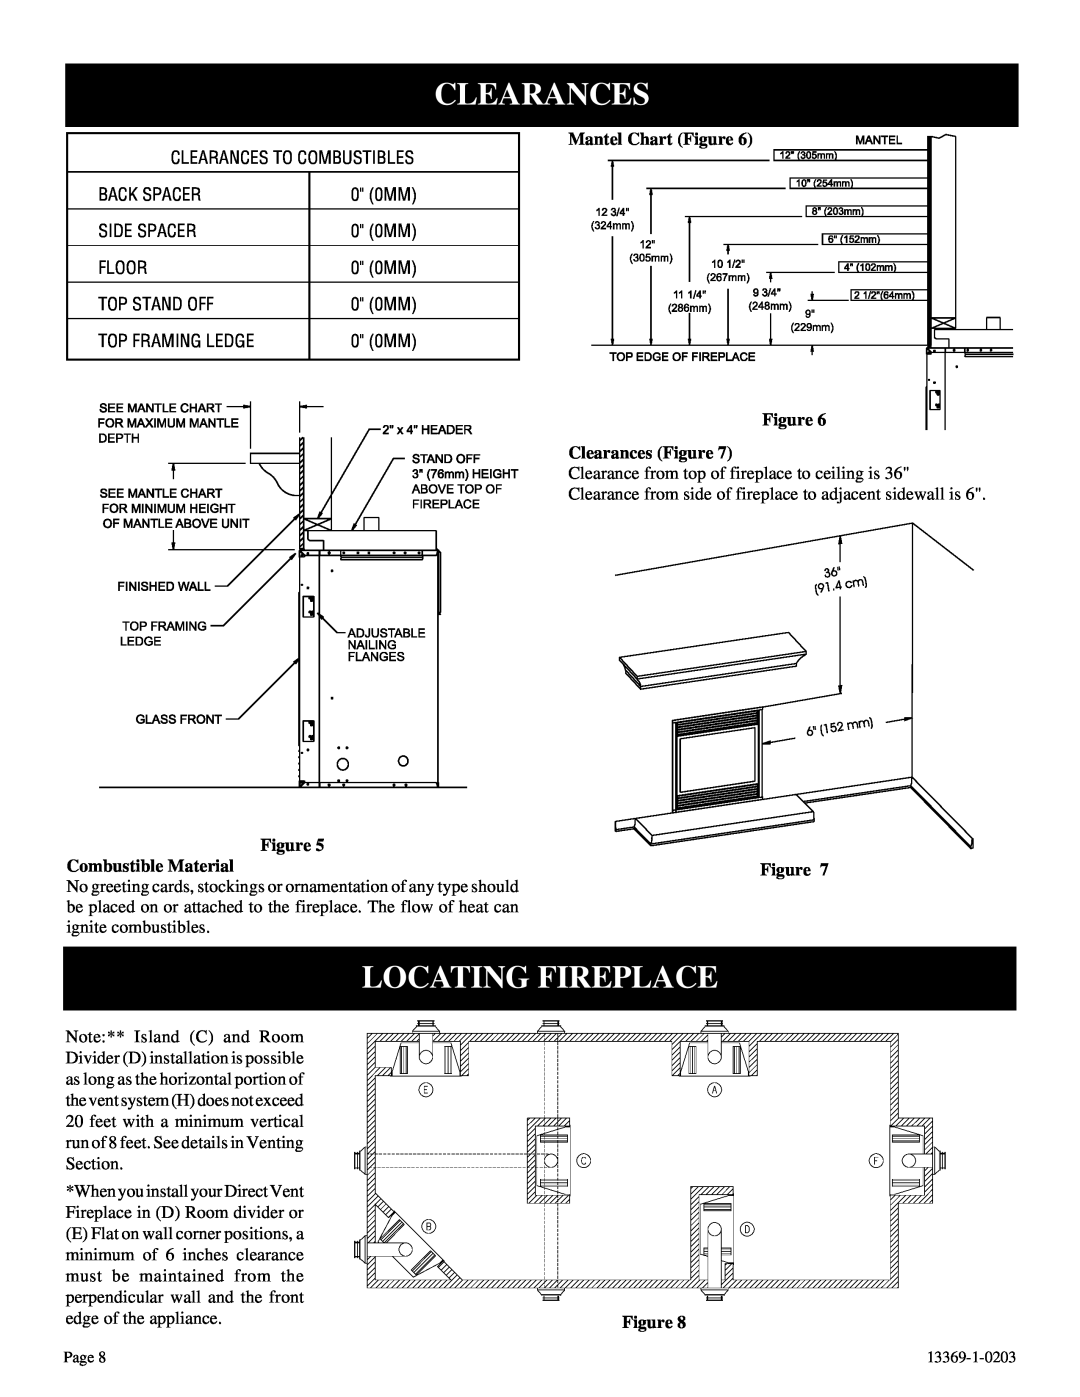 DVS 30-2 Locating Fireplace, Mantel Chart Figure, Figure Clearances Figure, Figure Combustible Material 